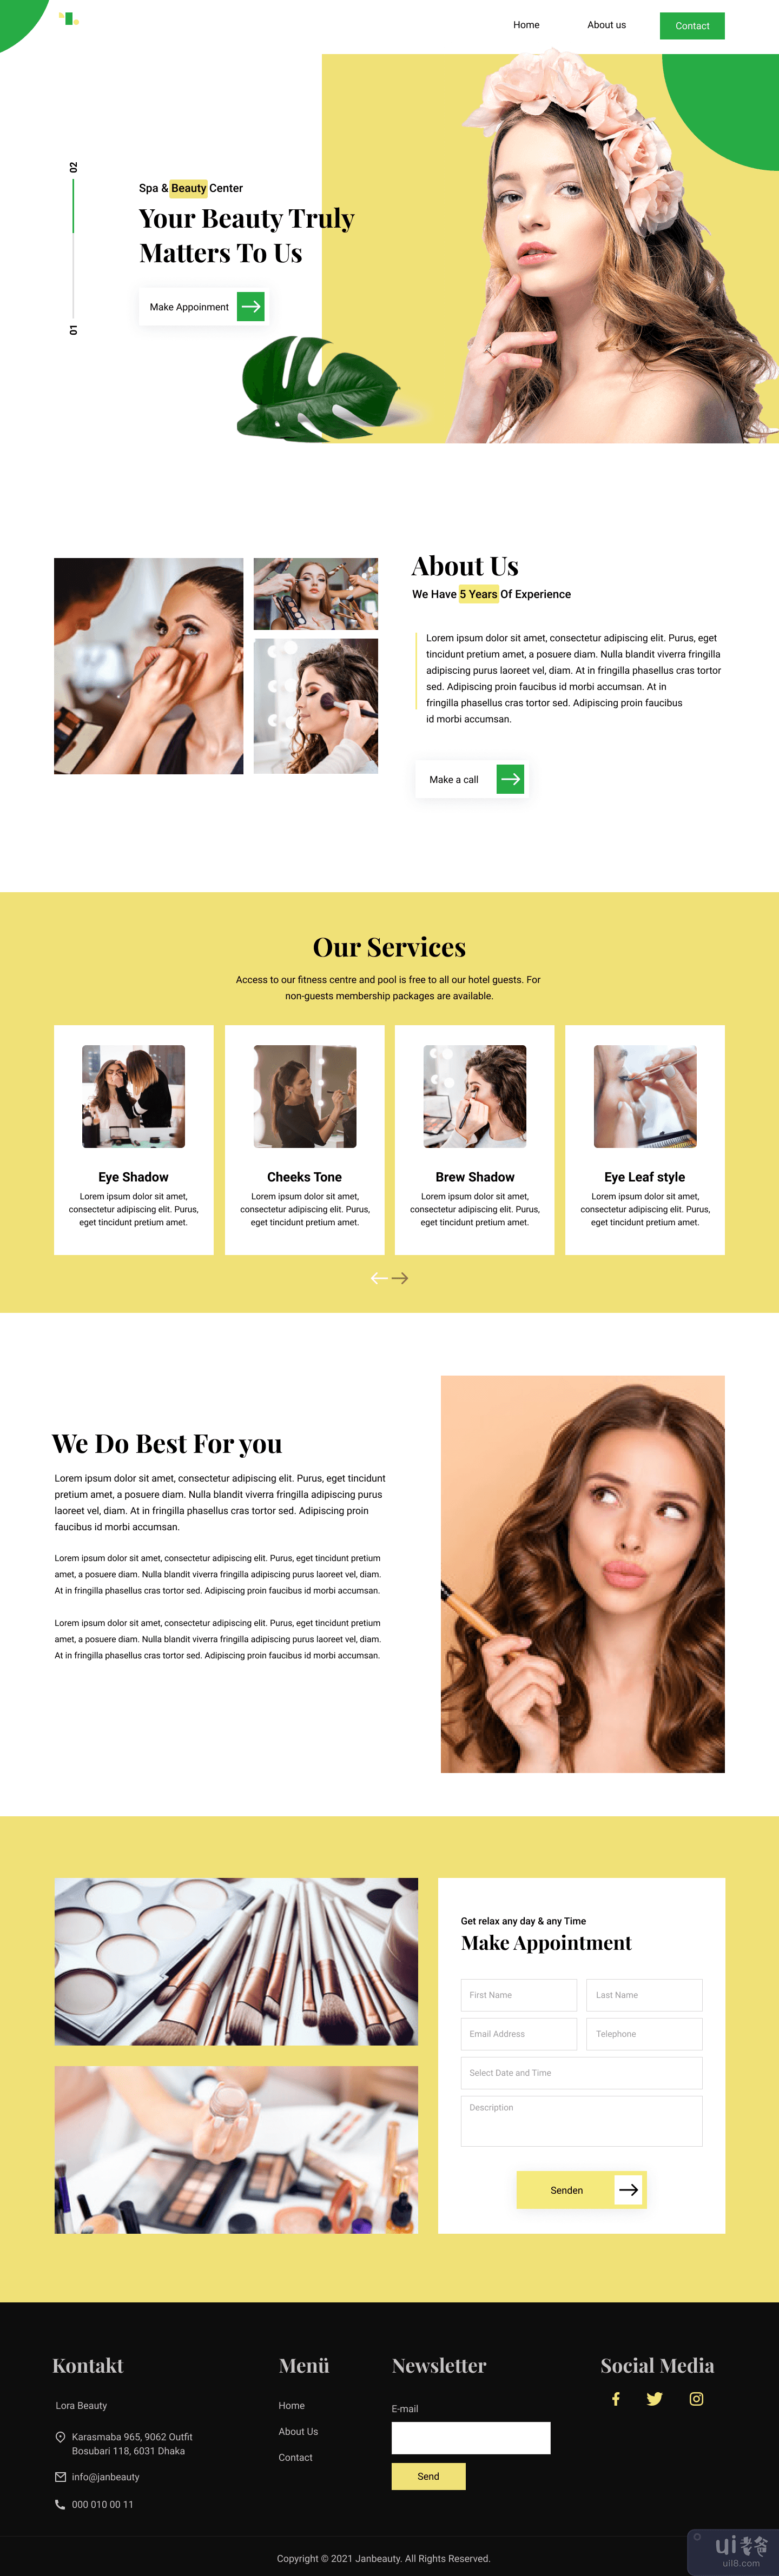 美容女孩沙龙的网络模型(Web mockup for beauty Girl Salon)插图